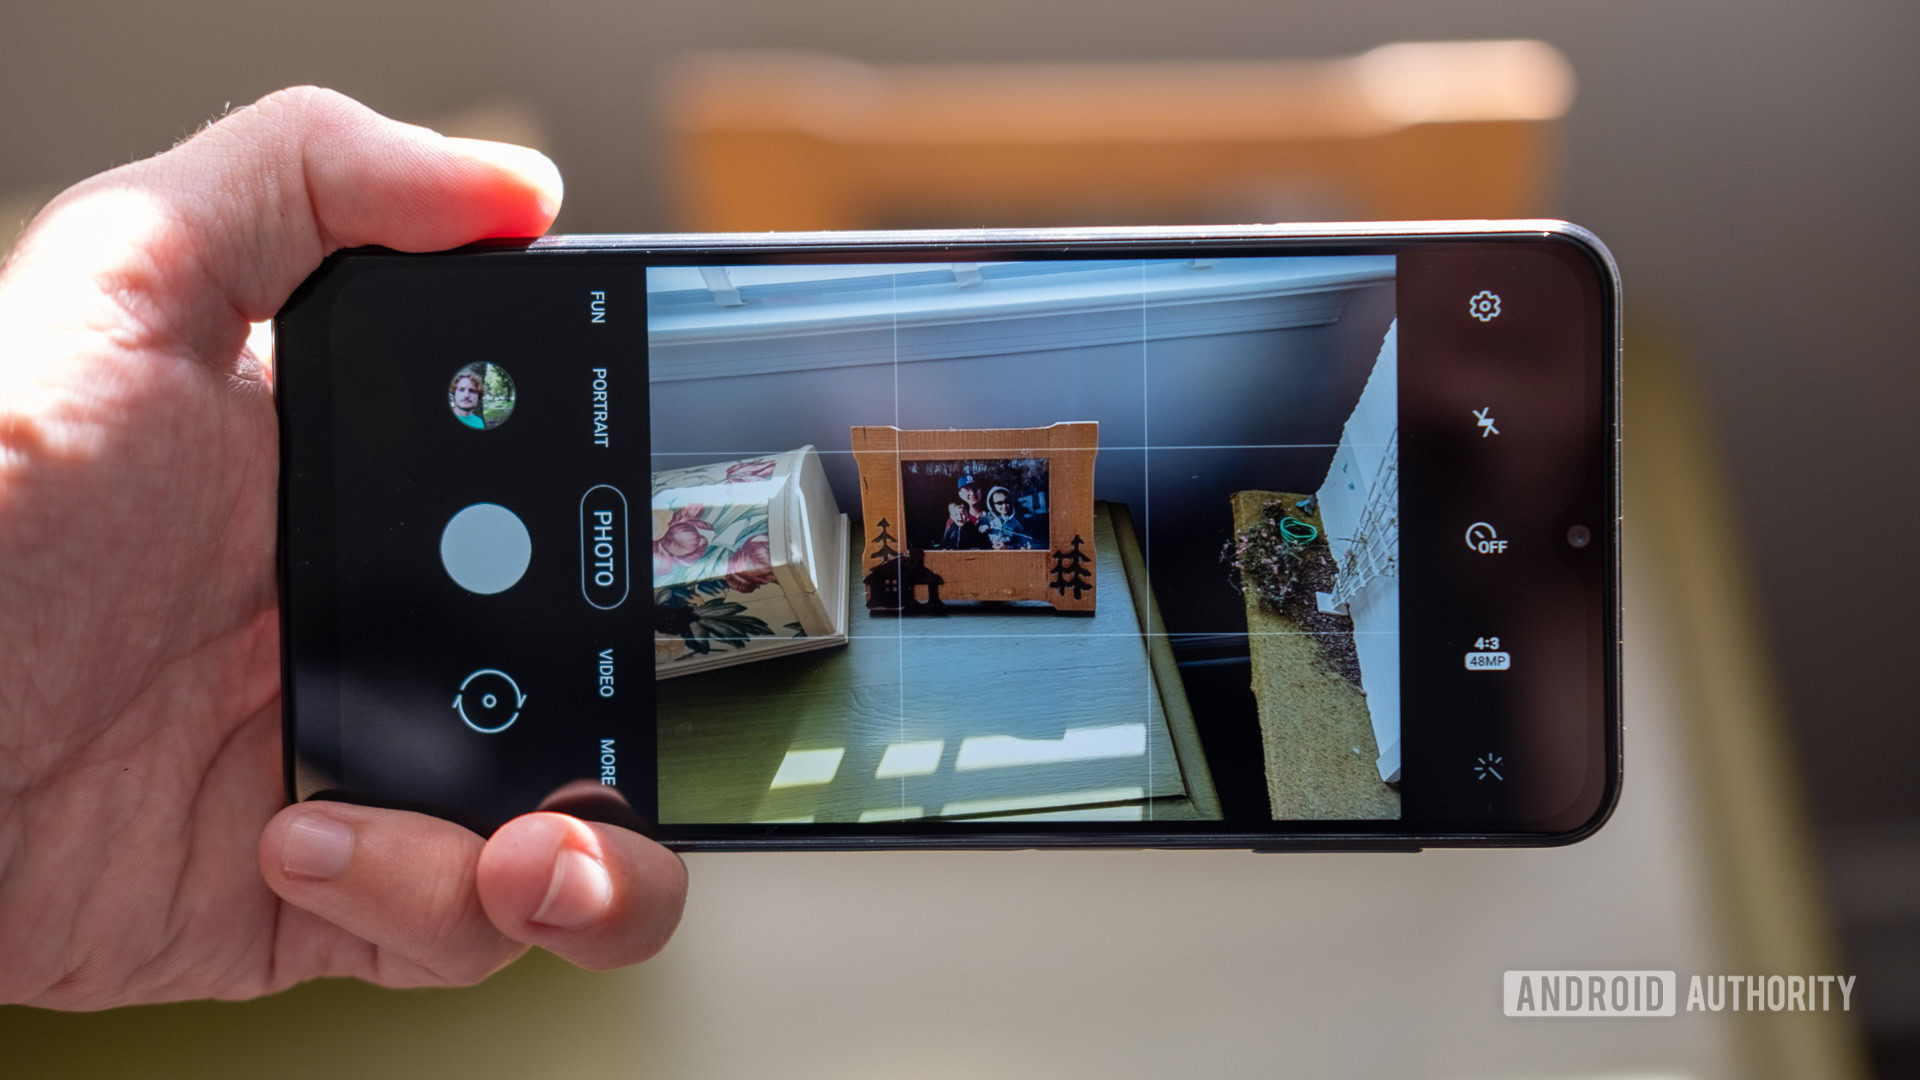 Samsung Galaxy A32 review: Camera quality